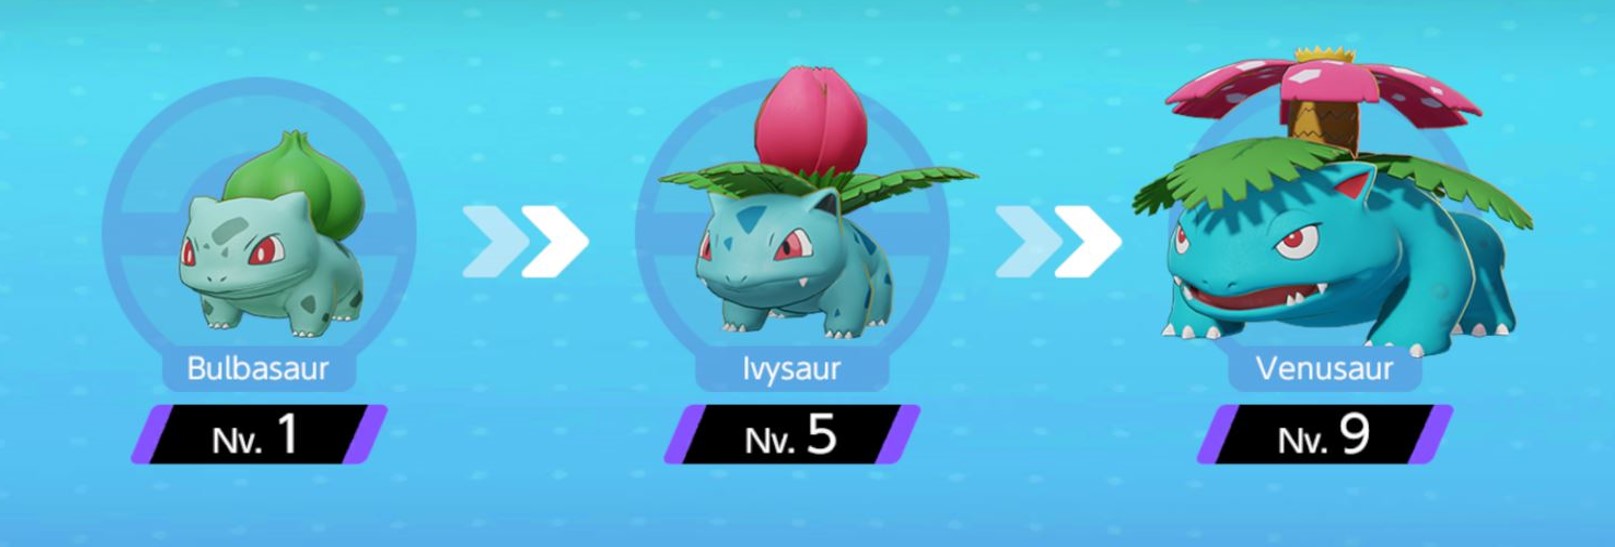 Pokémon Unite - Venusaur